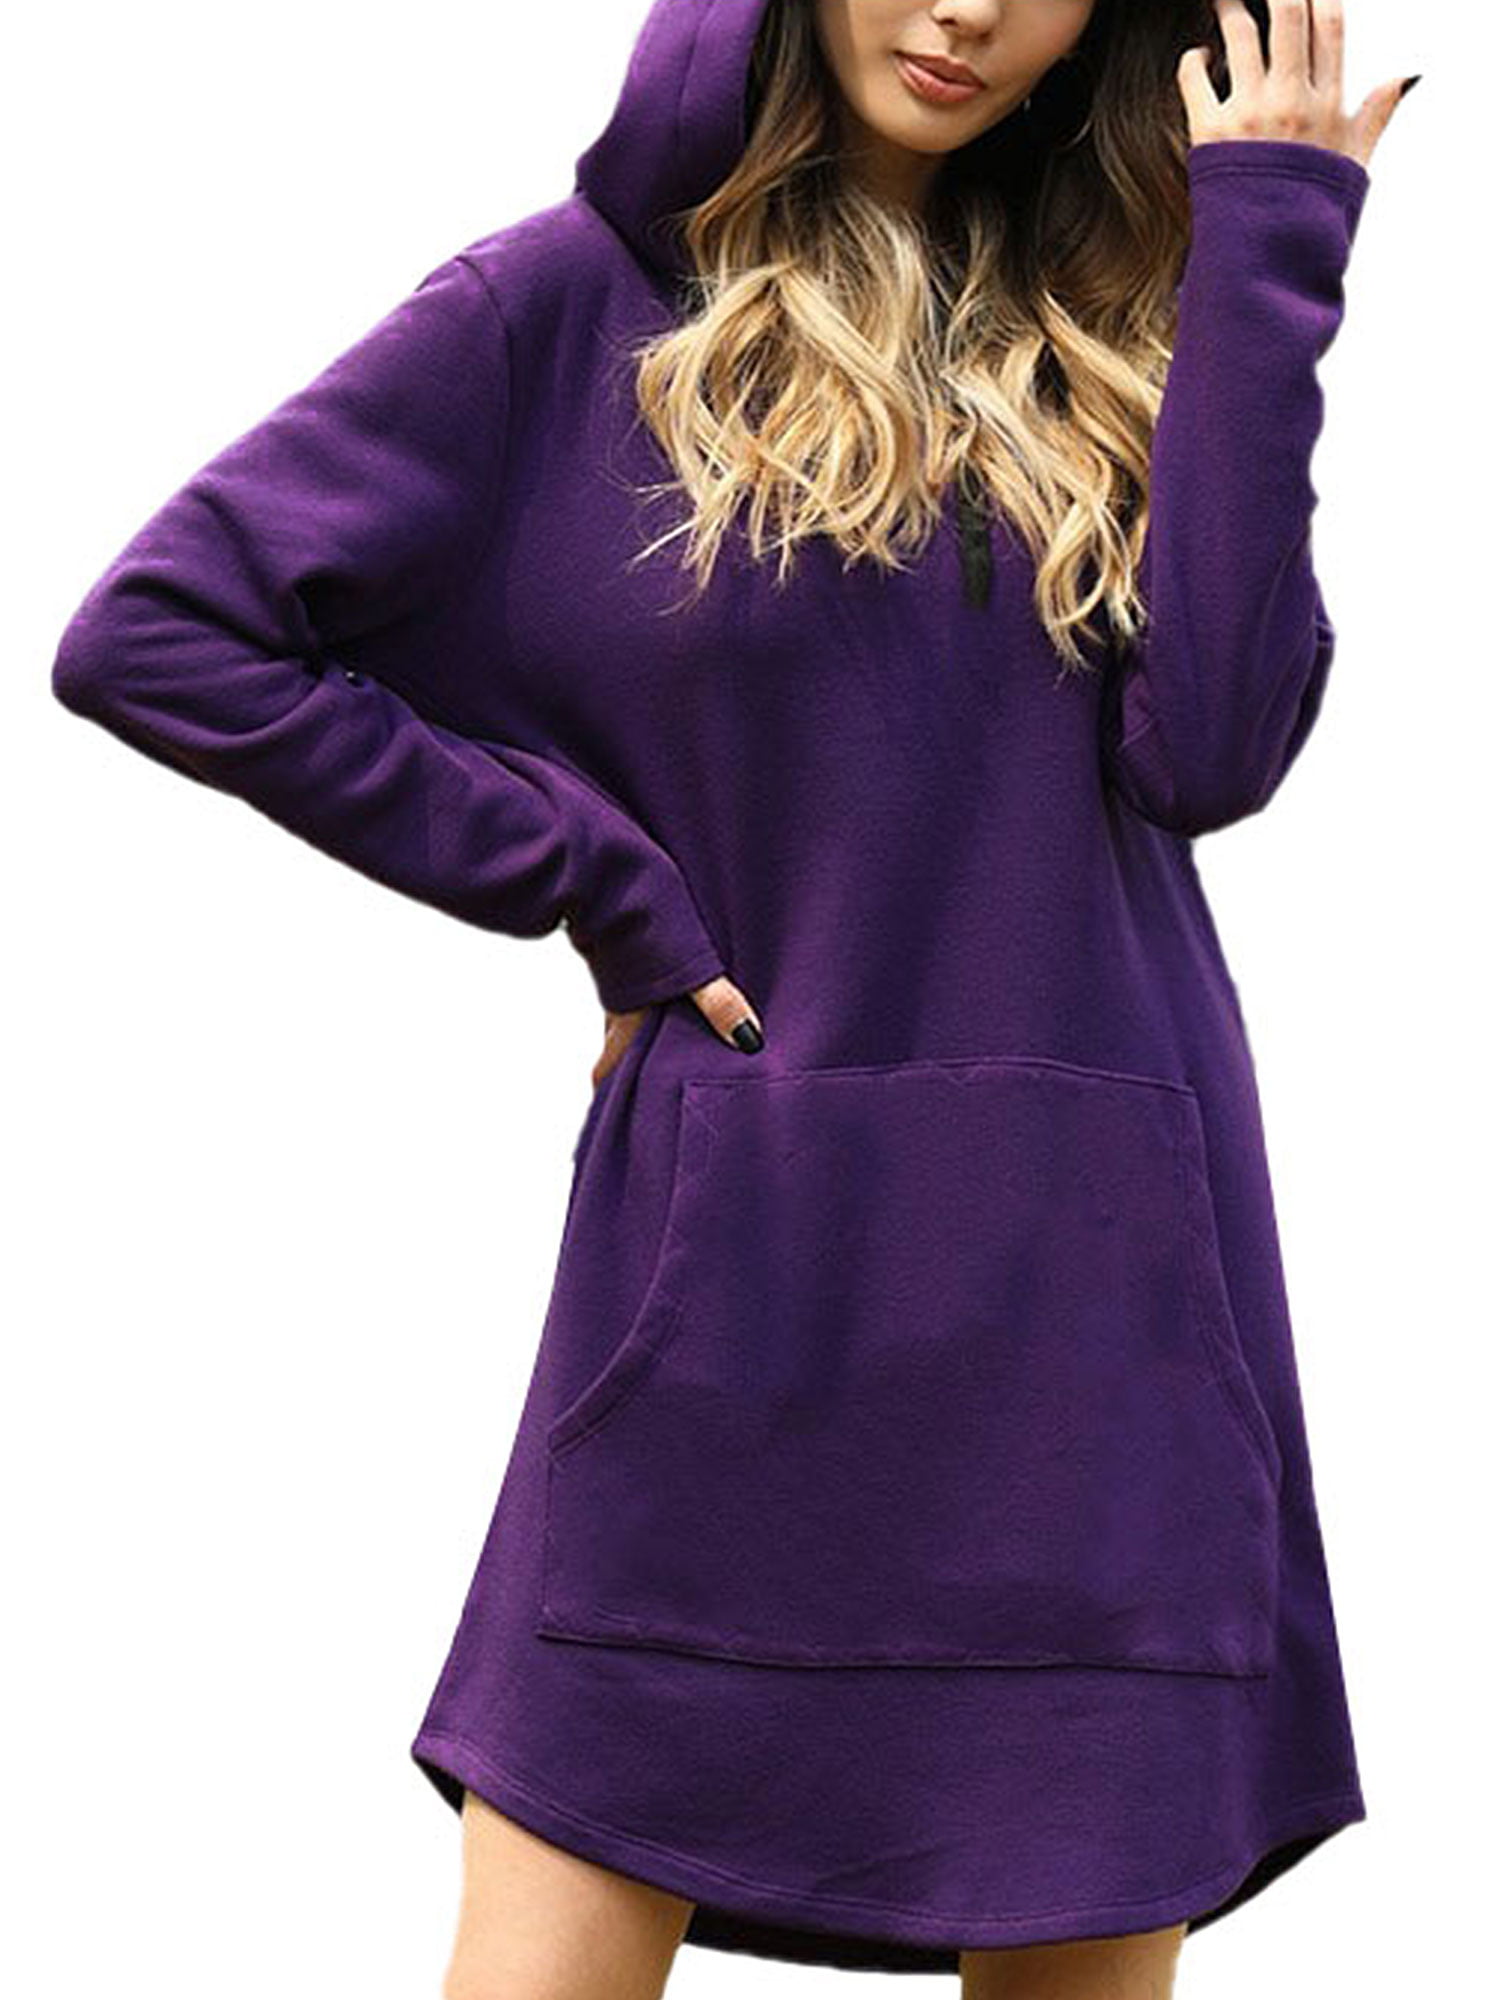 spyman for Women 2019 Fleece Solid Hoodies with Pockets Womens Sweatshirt Dresses Casual Vestidos